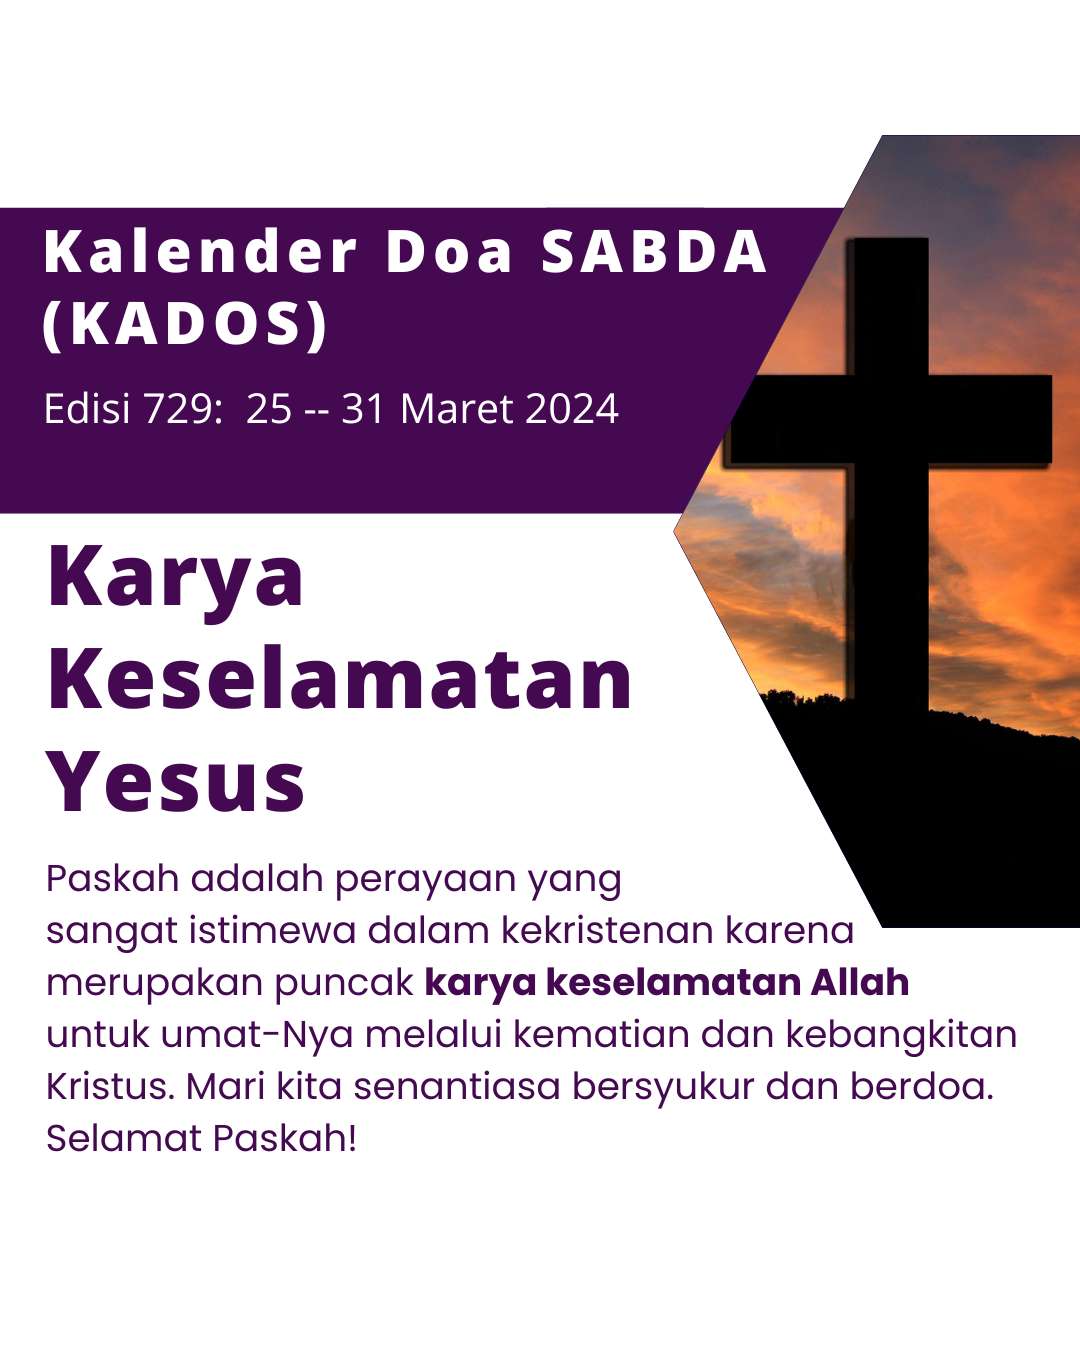 Pokok Doa KADOS 25 -- 31 Maret 2024